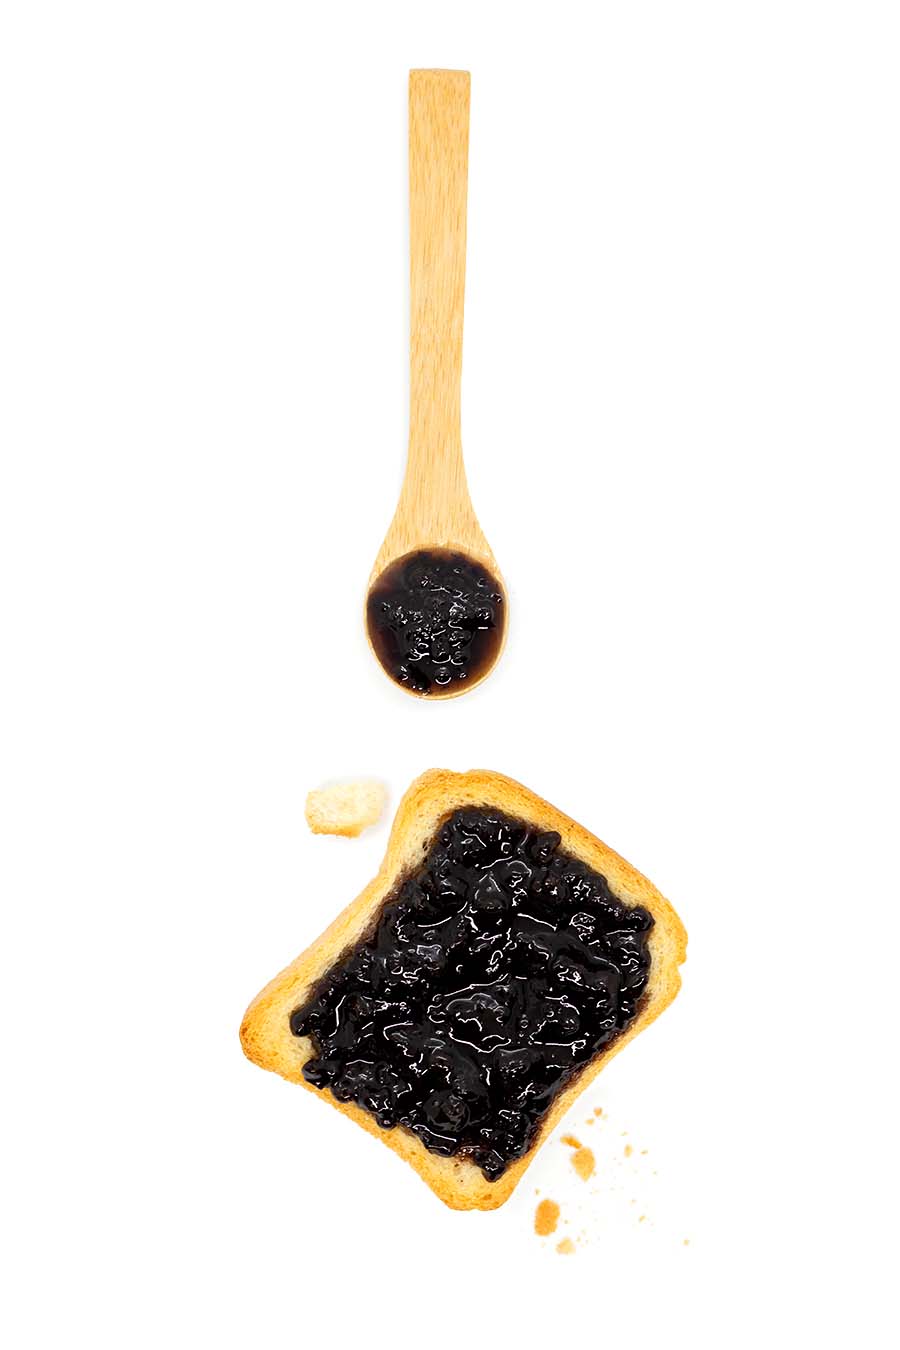 Artisanal Wild Blackberry Jam spoon toast Health from Europe